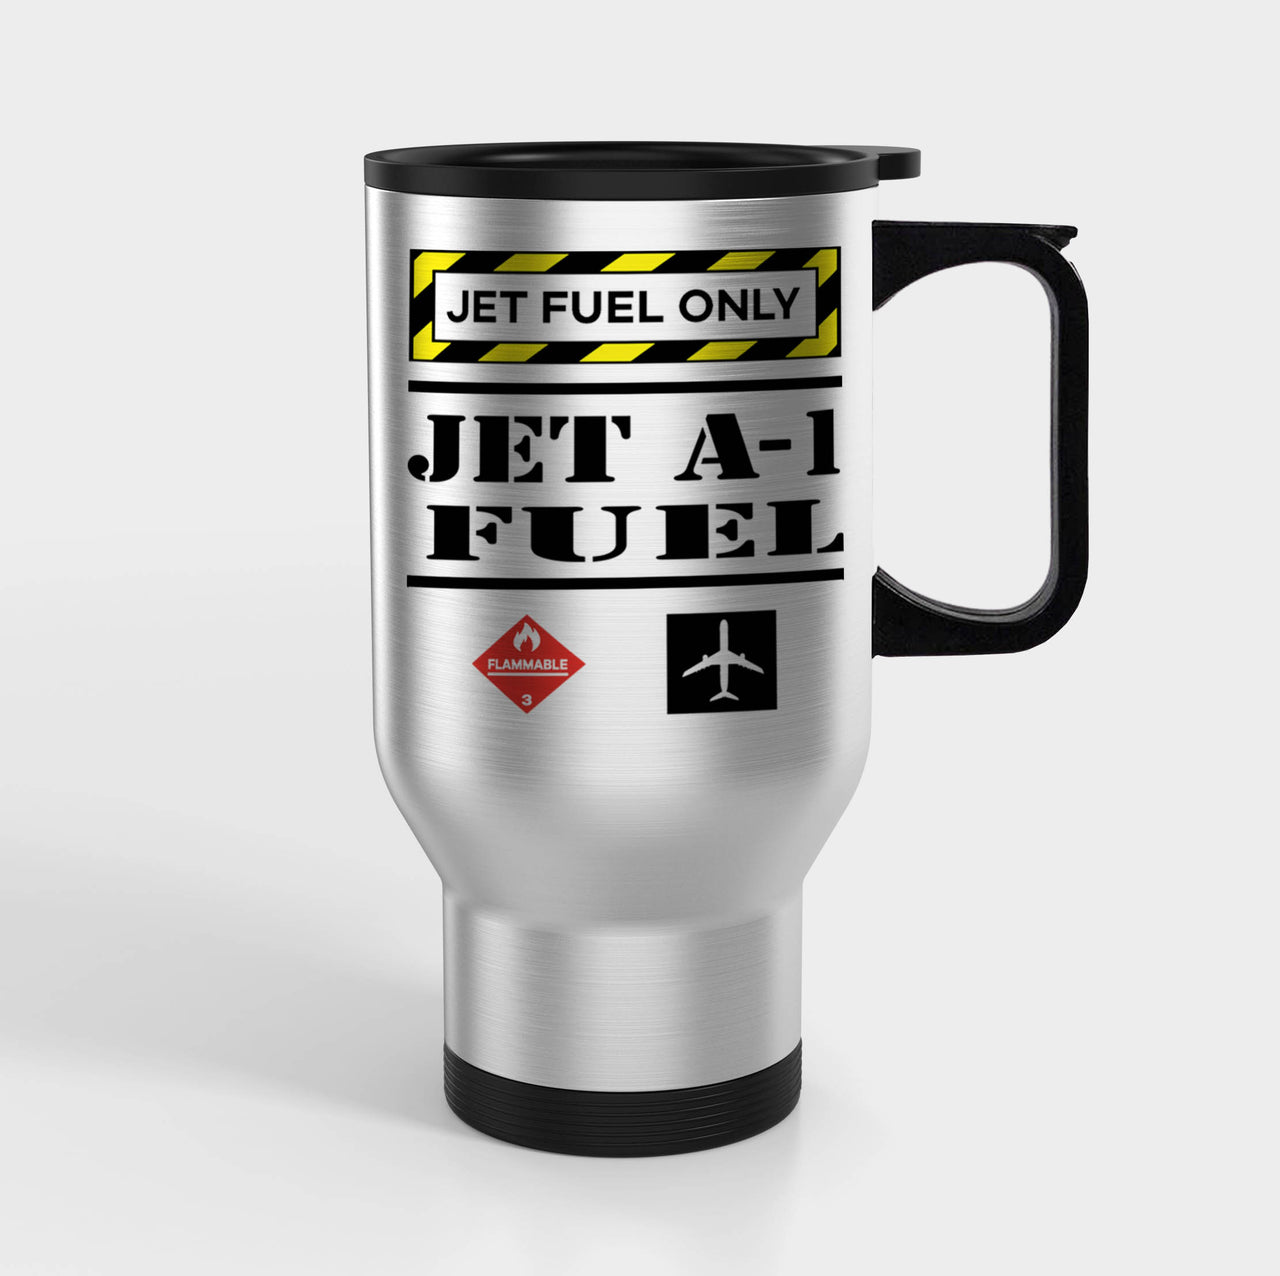 Jet Fuel Only Designed Travel Mugs (With Holder)